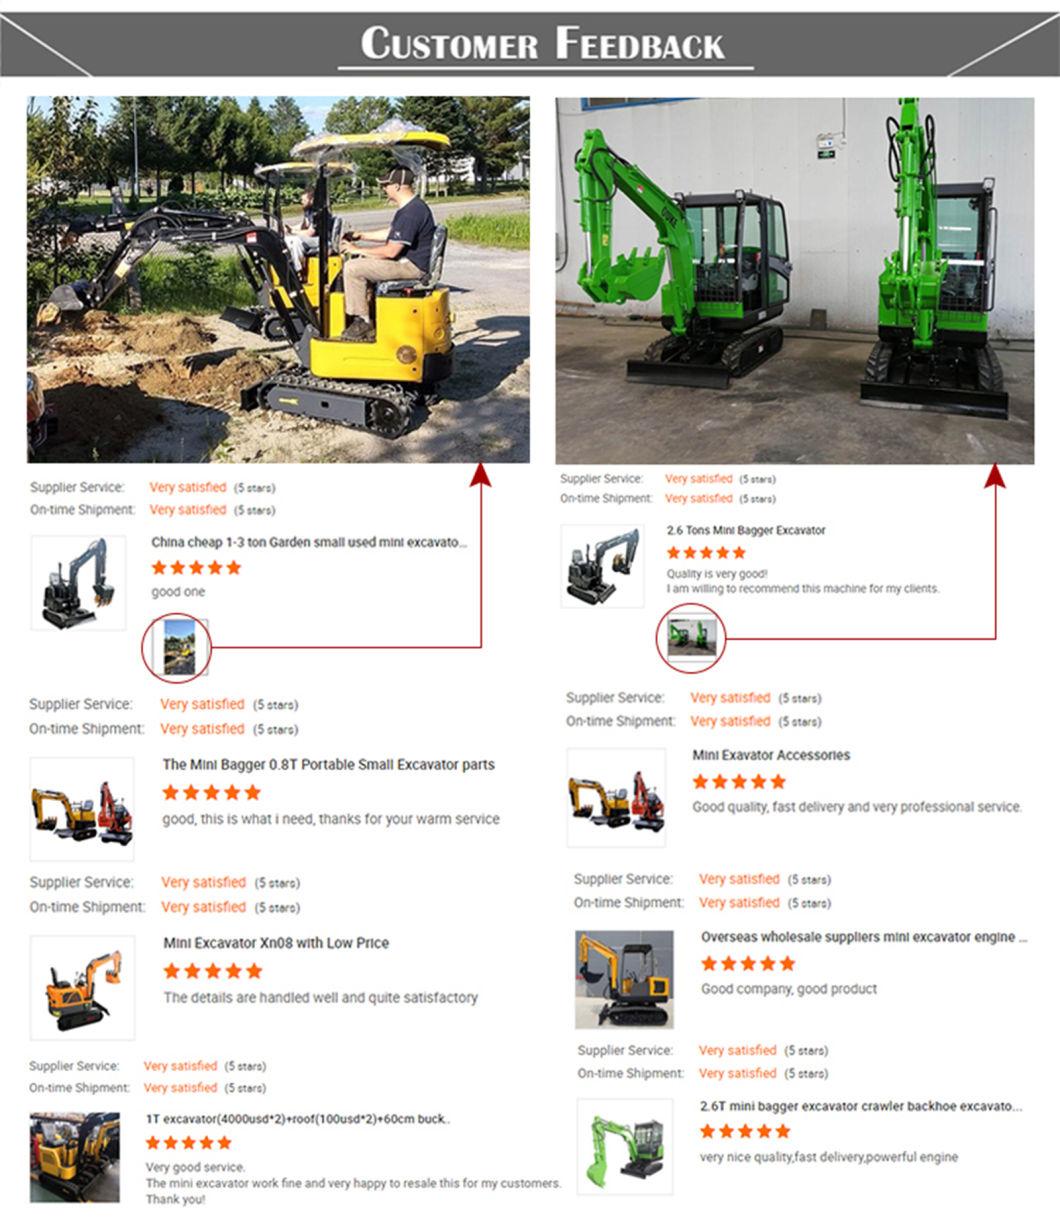 Advanced Technology Excavator Joystick Handle Excavator Made in China